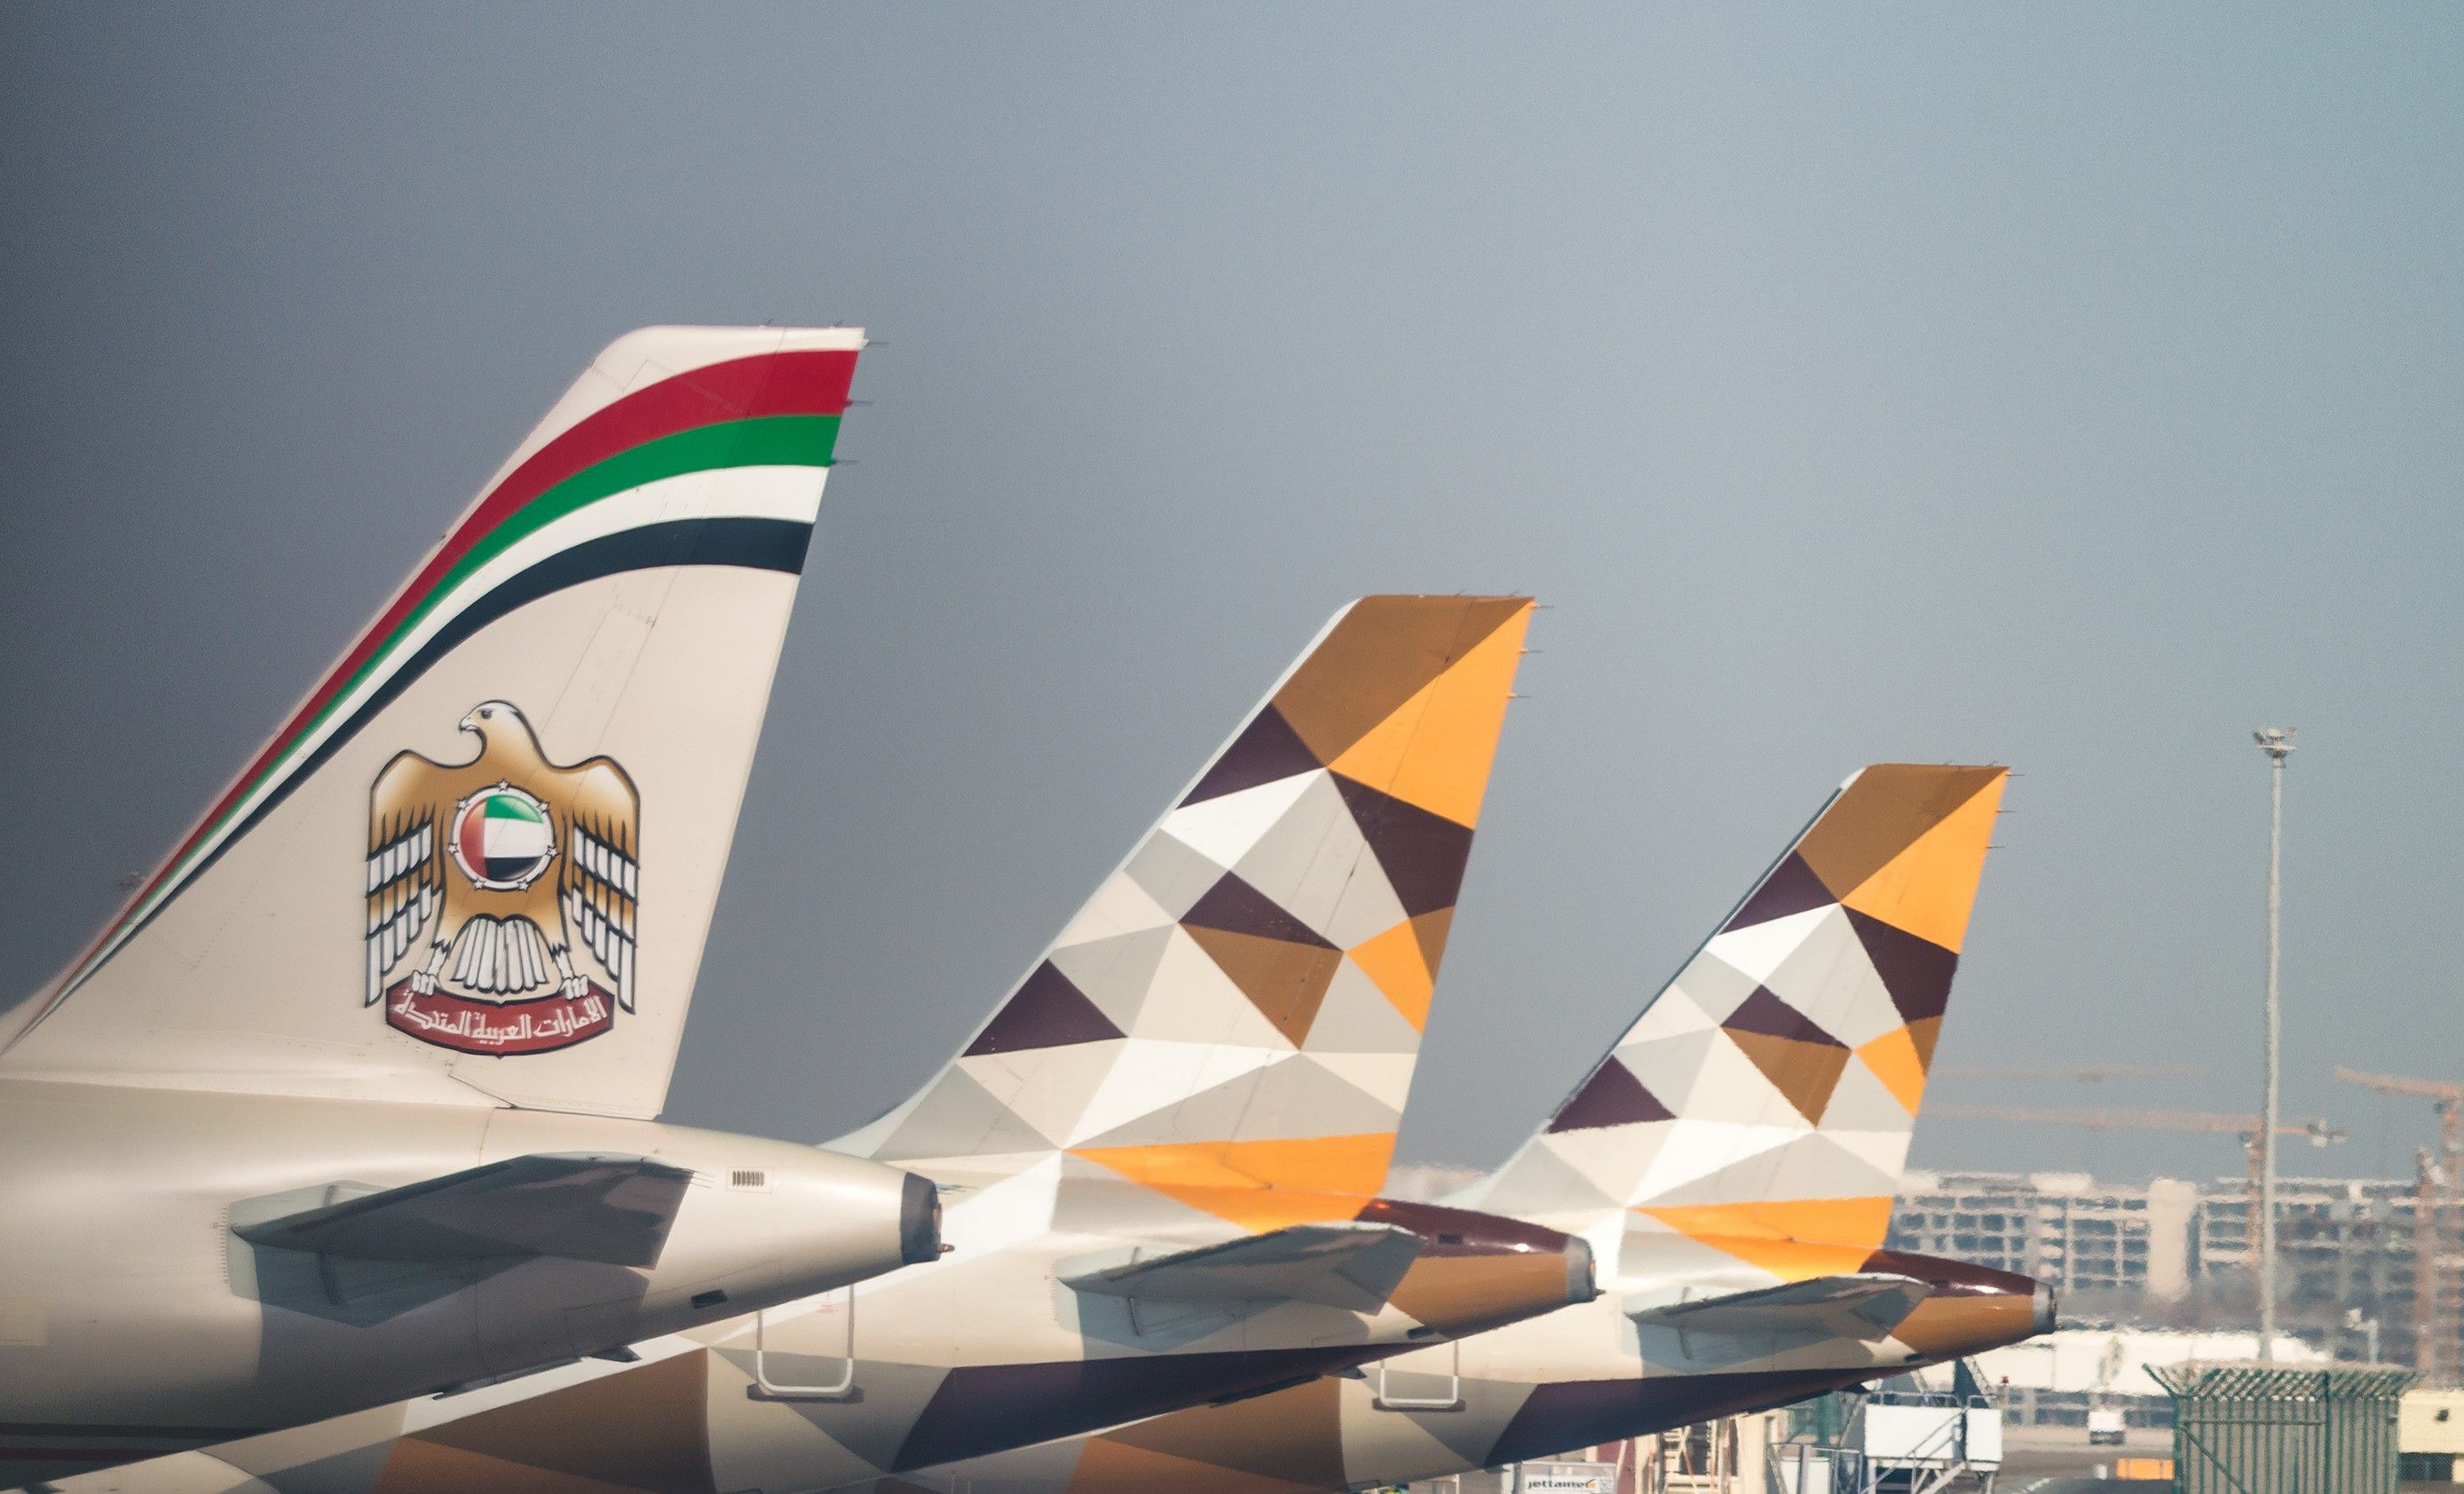 Etihad planes parked at Abu Dhabi International Airport